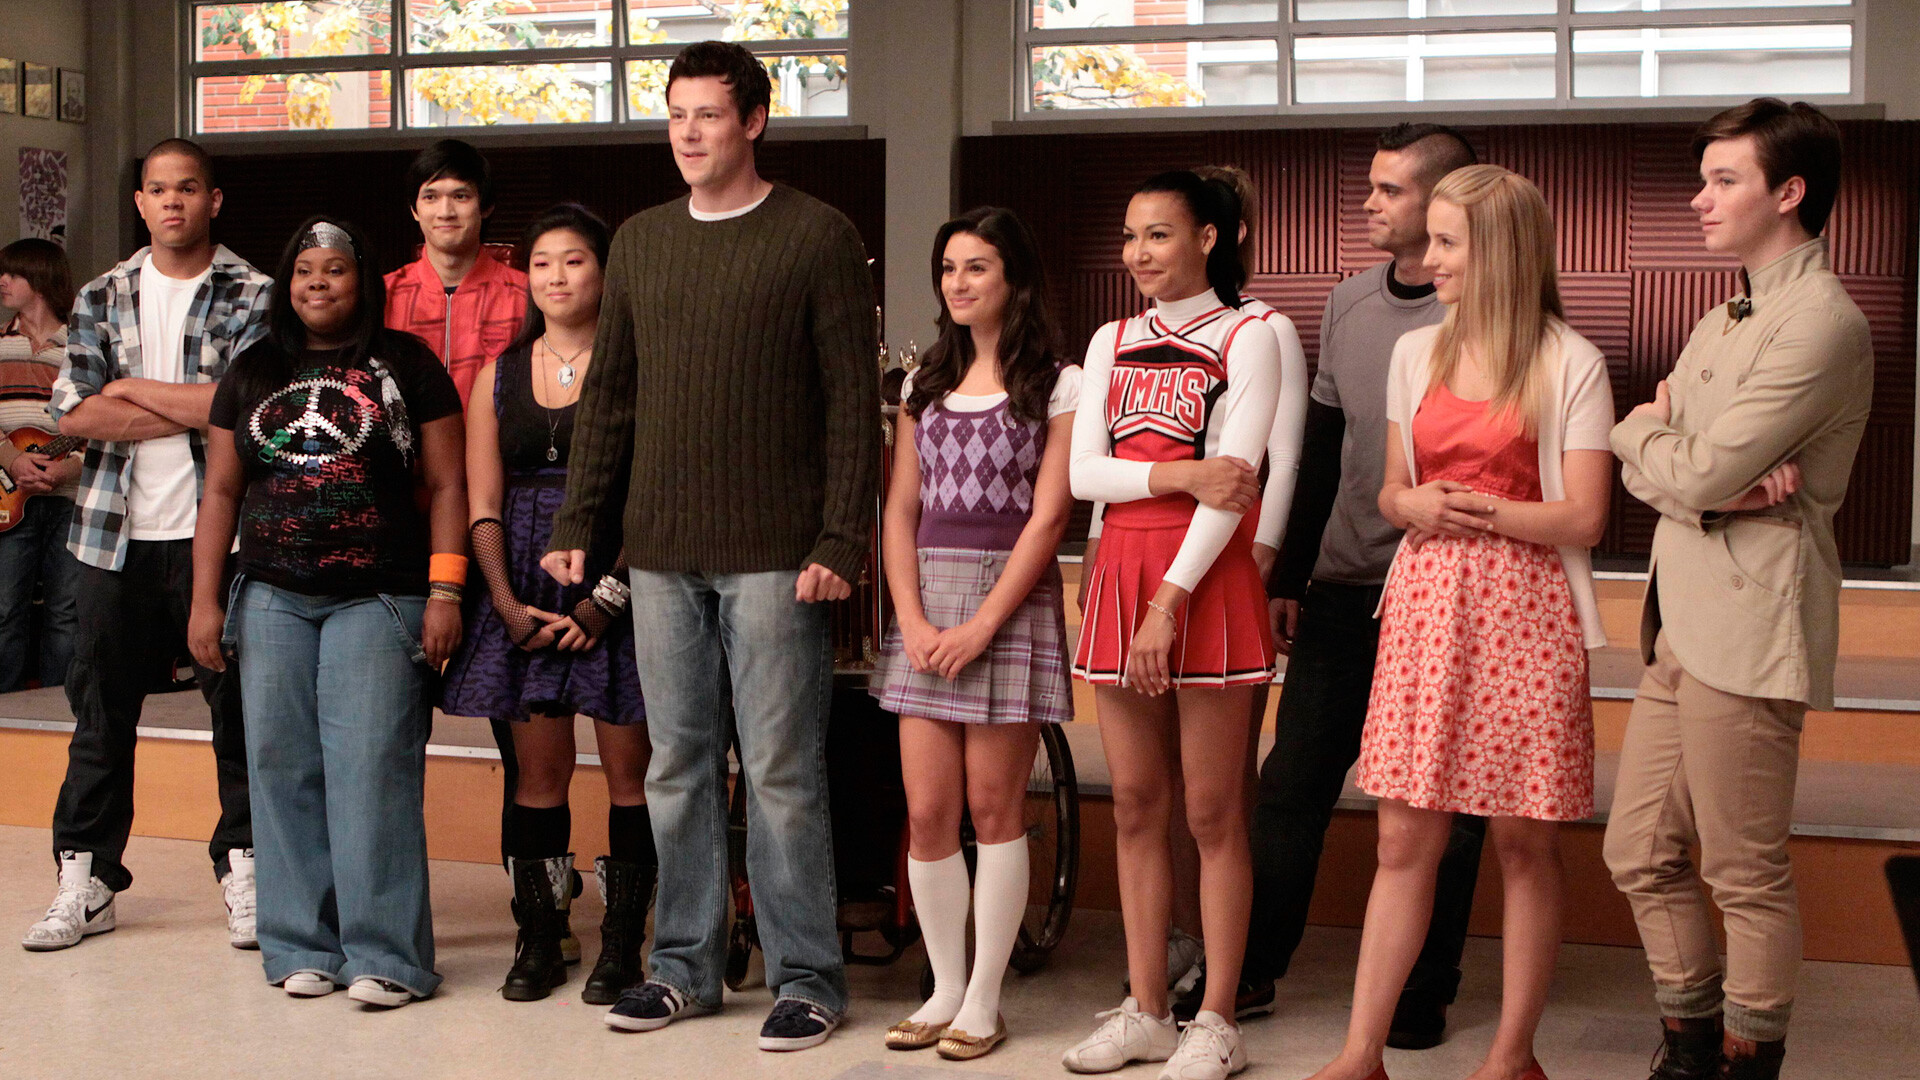 Glee (TV series): Season 6 Cast: Lea Michele, Naya Rivera, Cory Monteith, Dianna Agron, Jacob Artist. 1920x1080 Full HD Wallpaper.